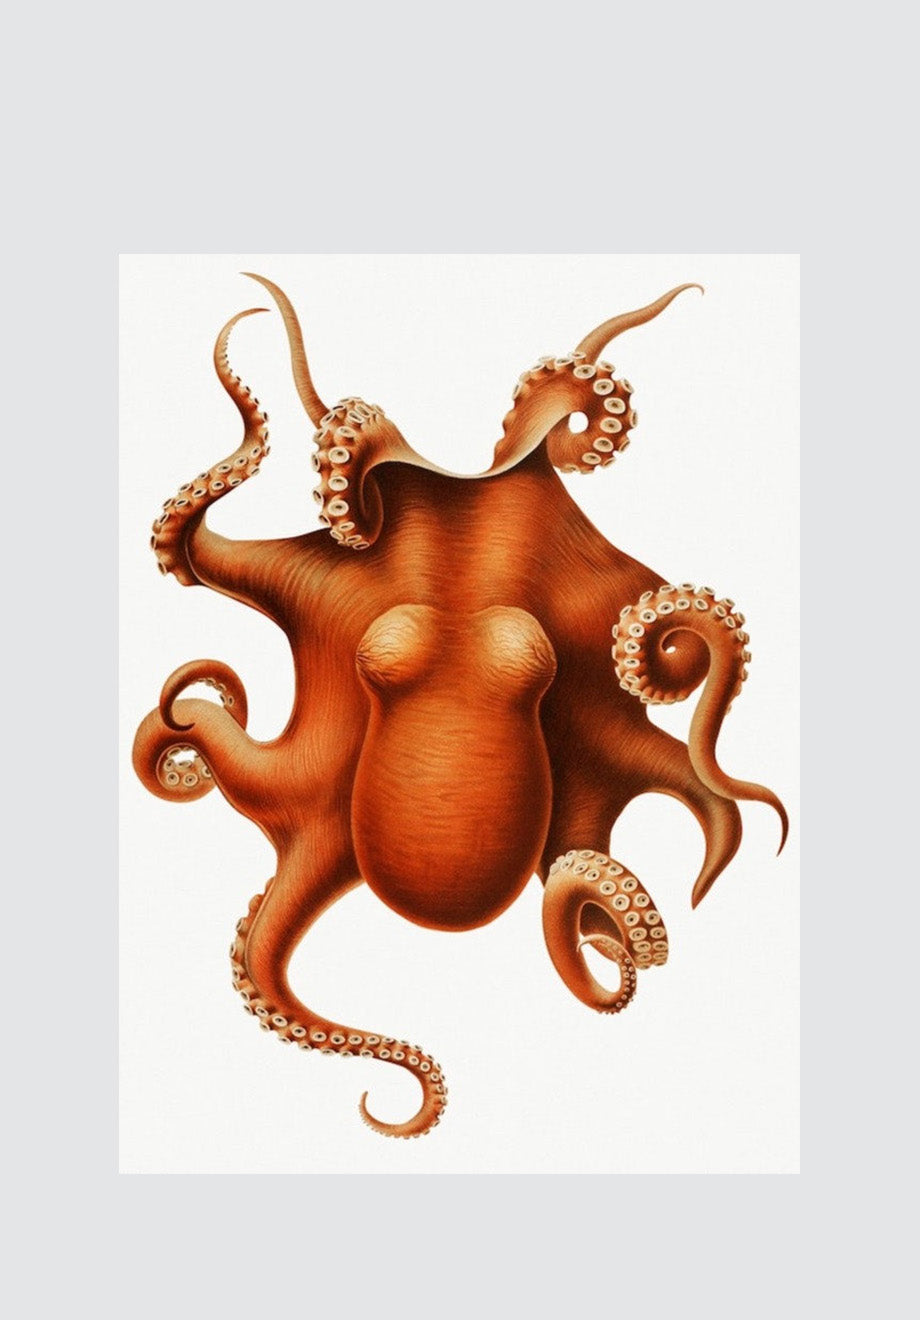 Levis Octopus Print